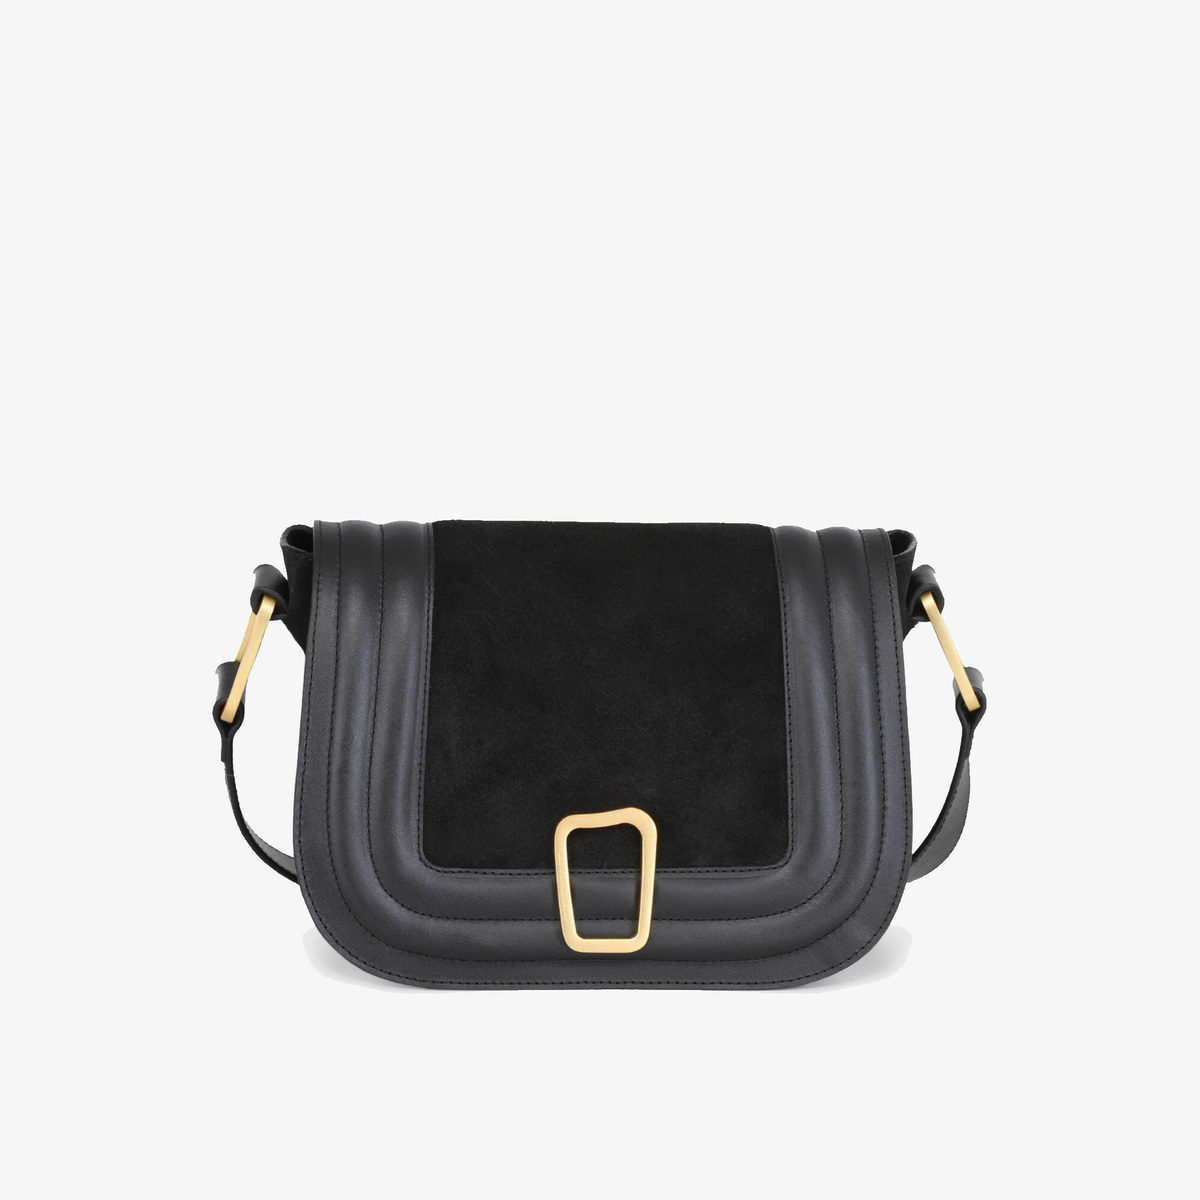 Shoulder bag Barth, City Black - W23 x H16 x D7 cm - 100% leather  - image 3